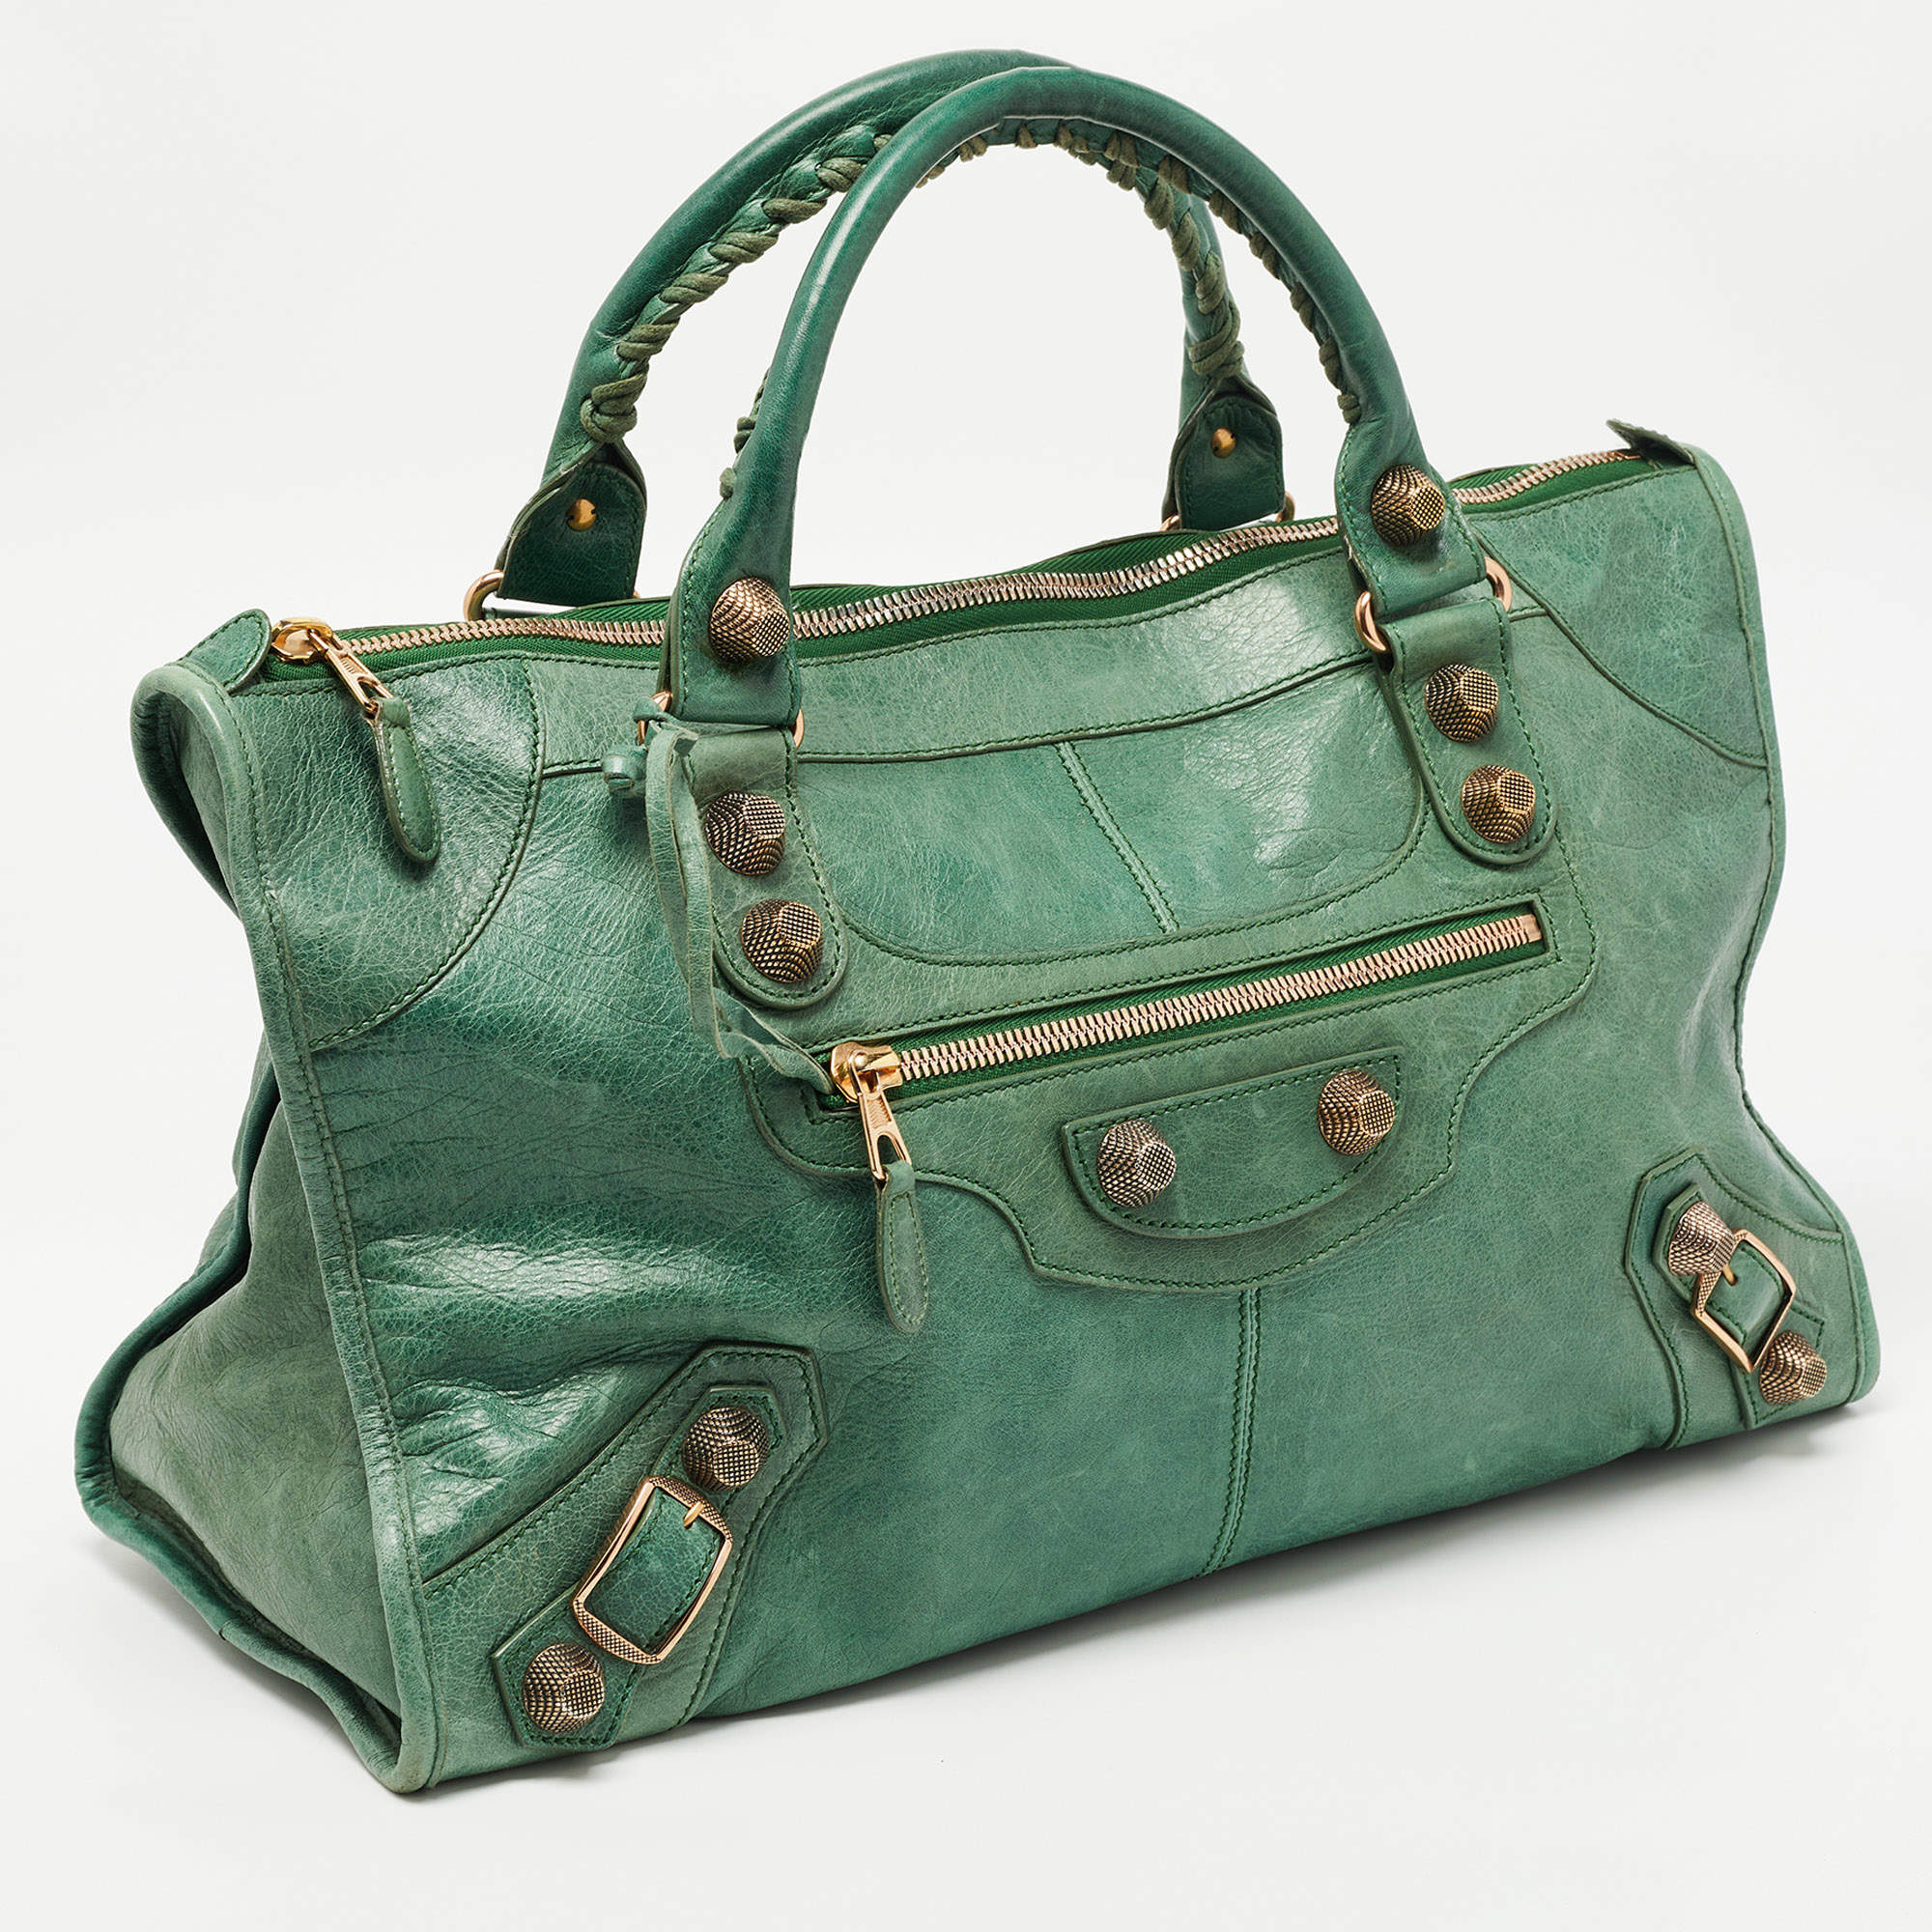 Balenciaga Giant Work Bag Mint Green Leather 173080